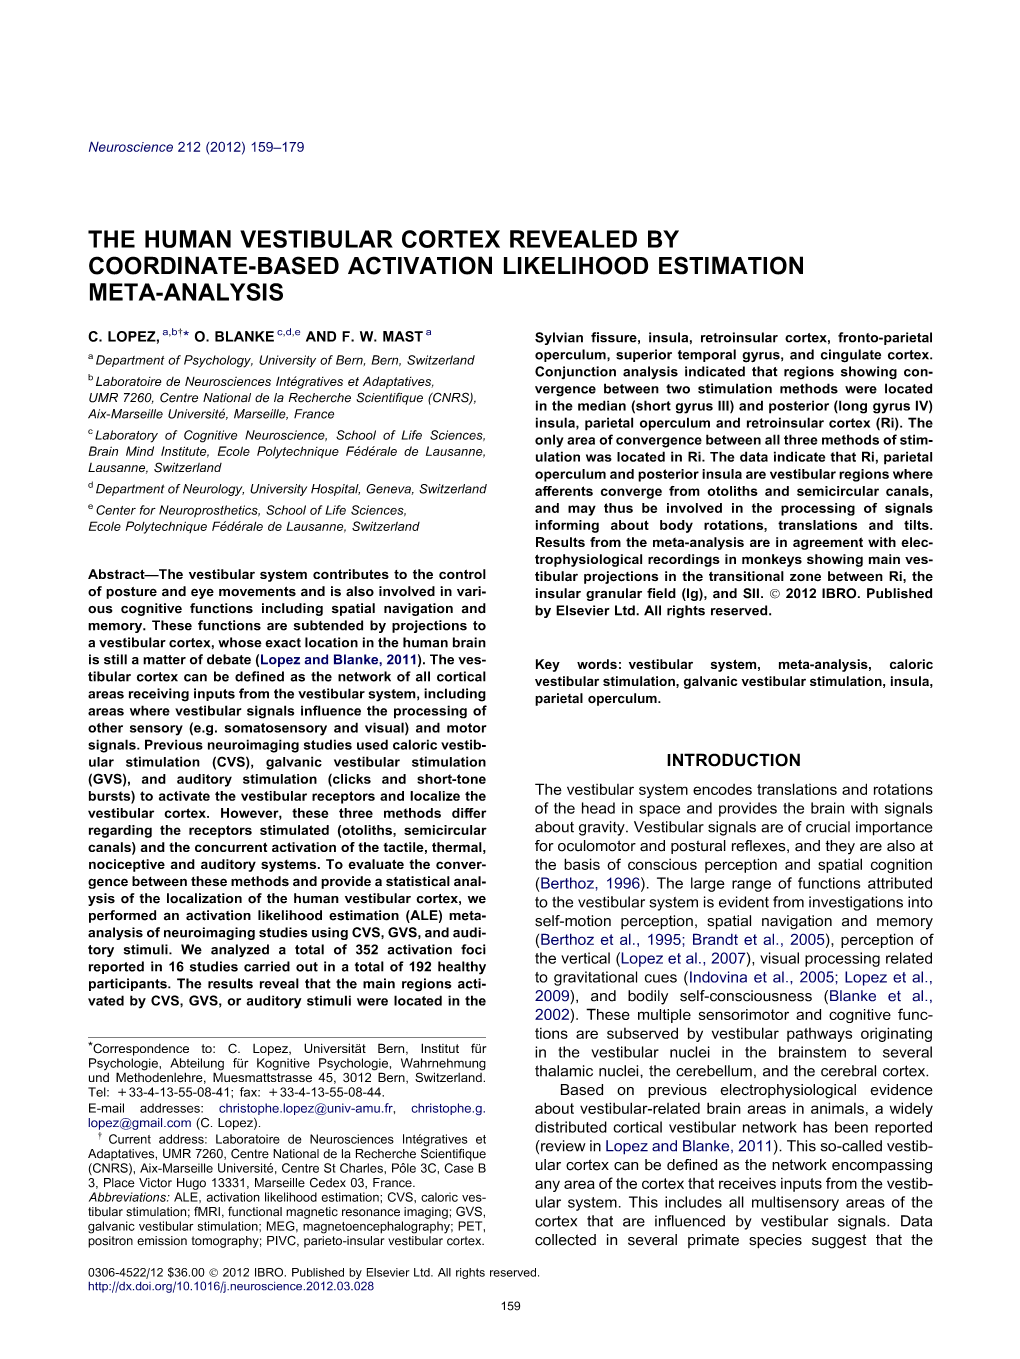 The Human Vestibular Cortex Revealed by Coordinate-Based Activation Likelihood Estimation Meta-Analysis